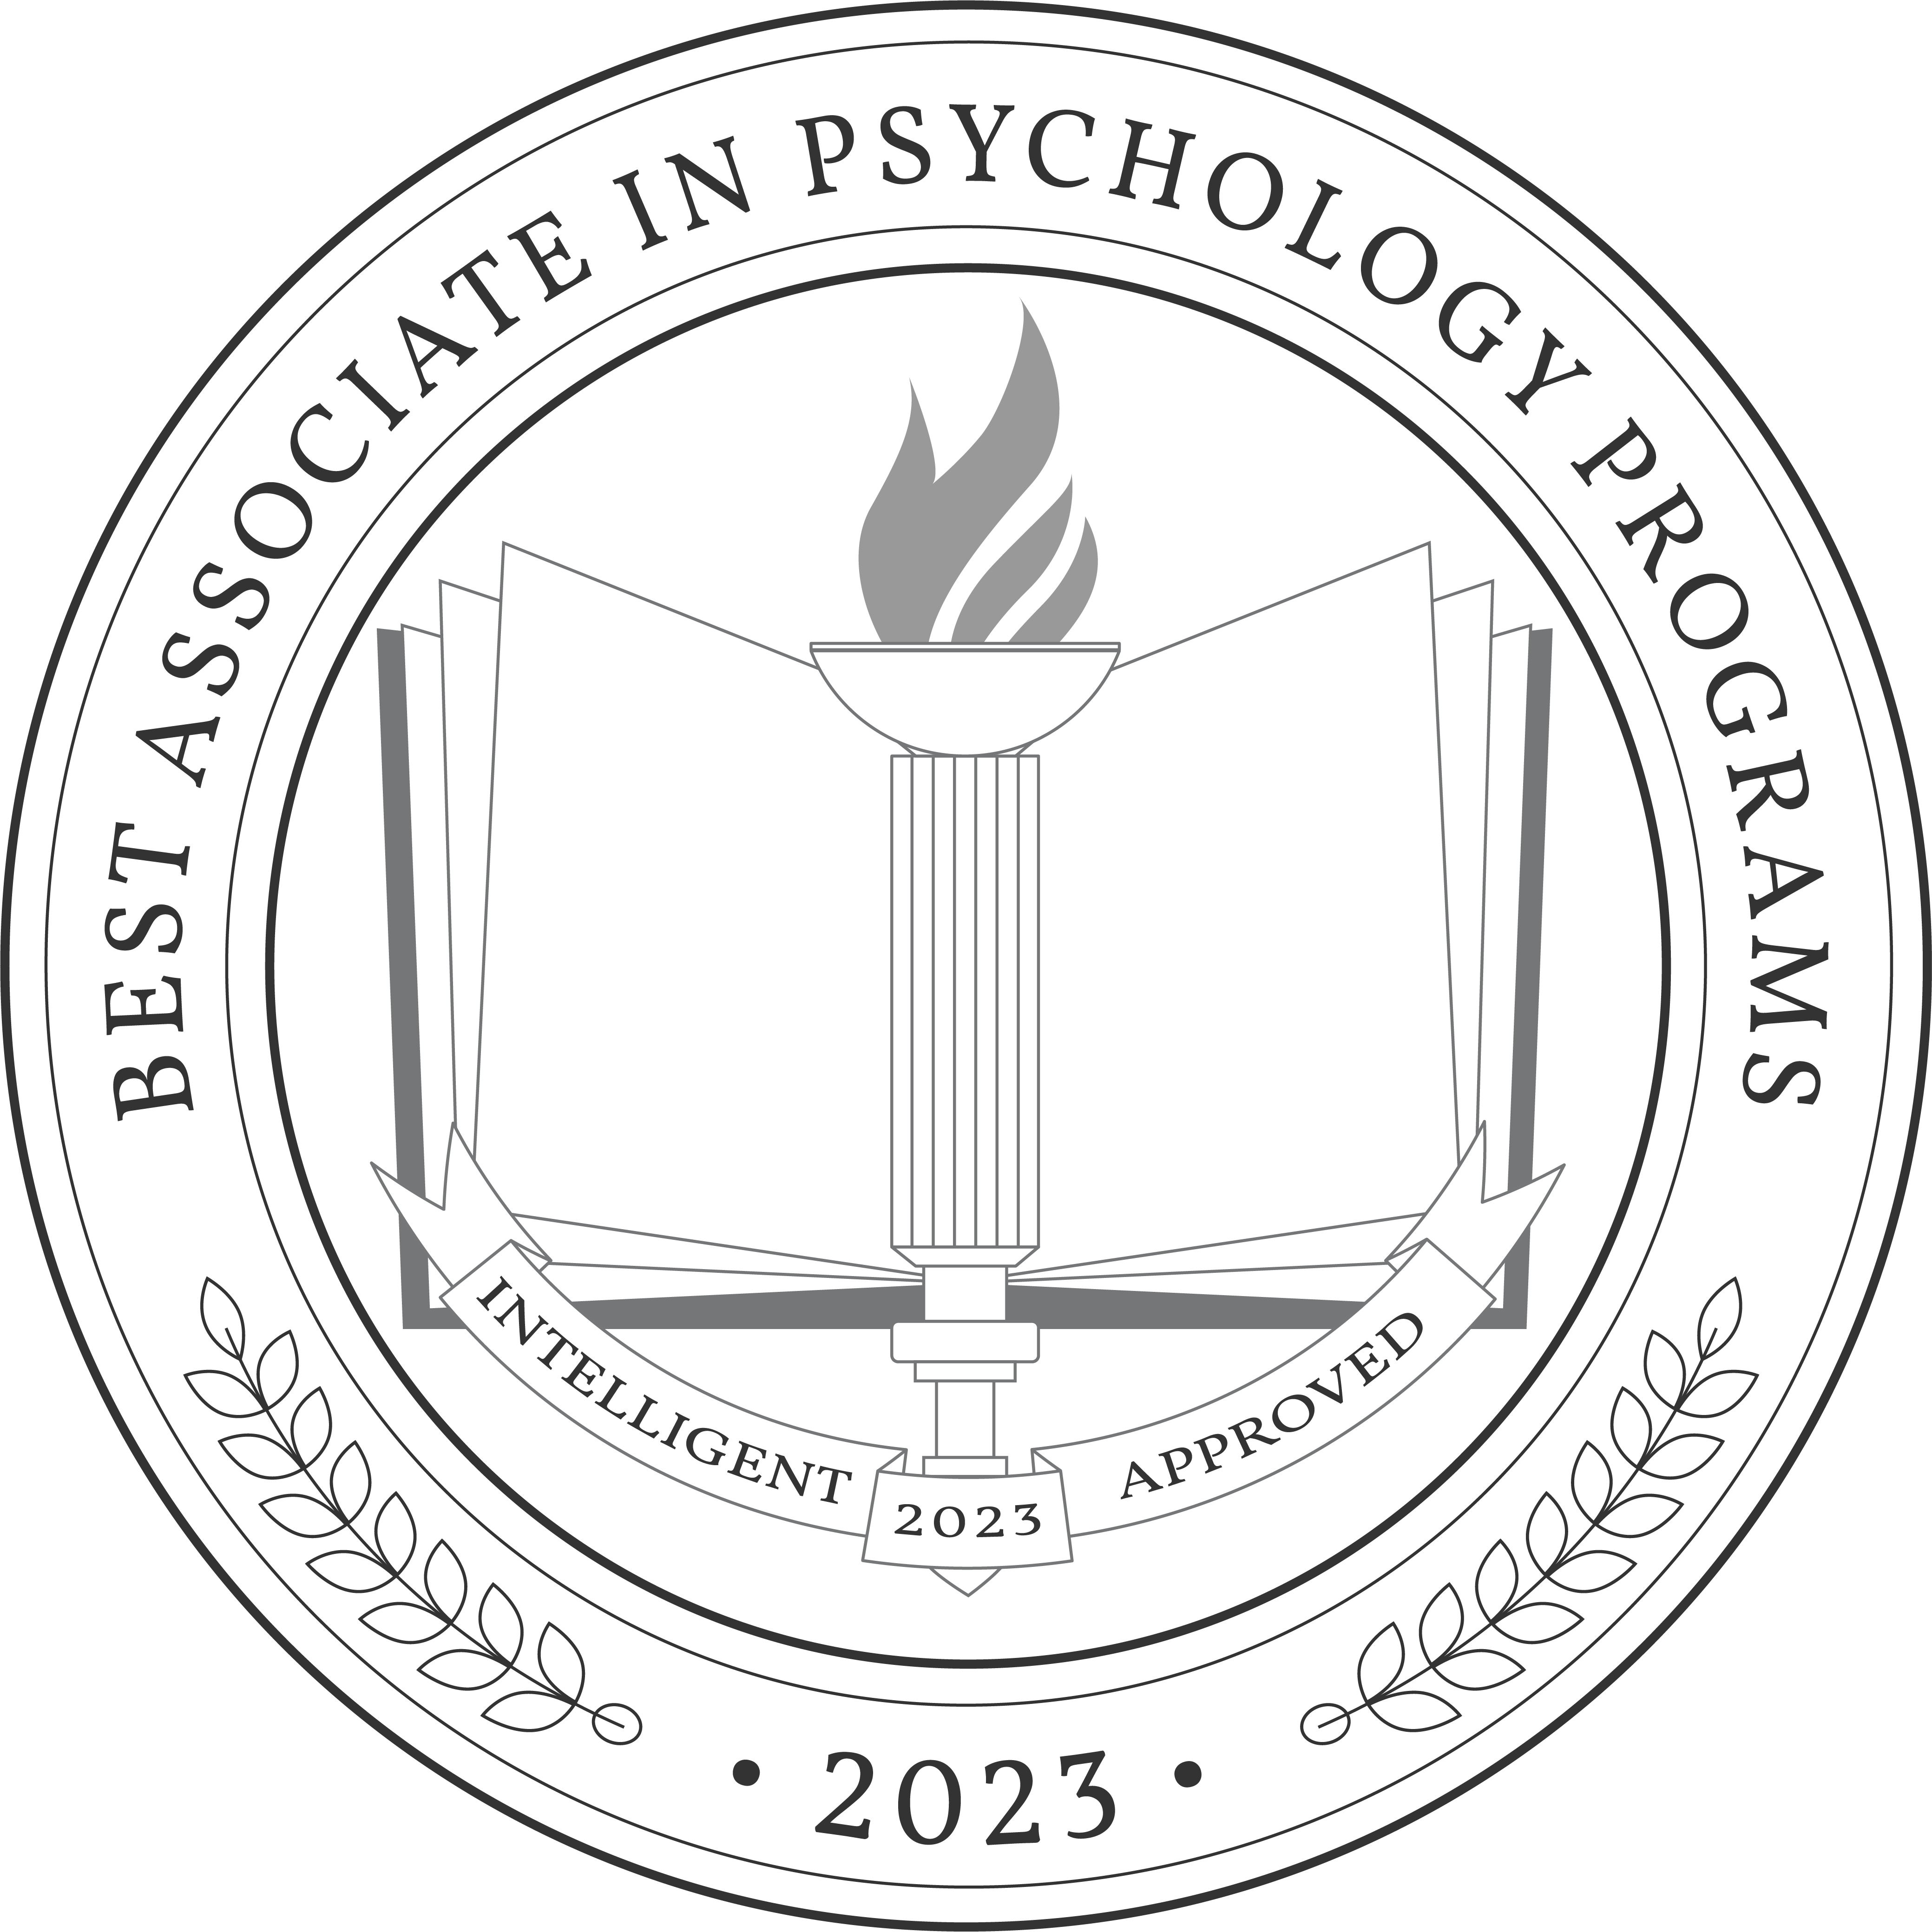 Best Associate in Psychology Programs badge